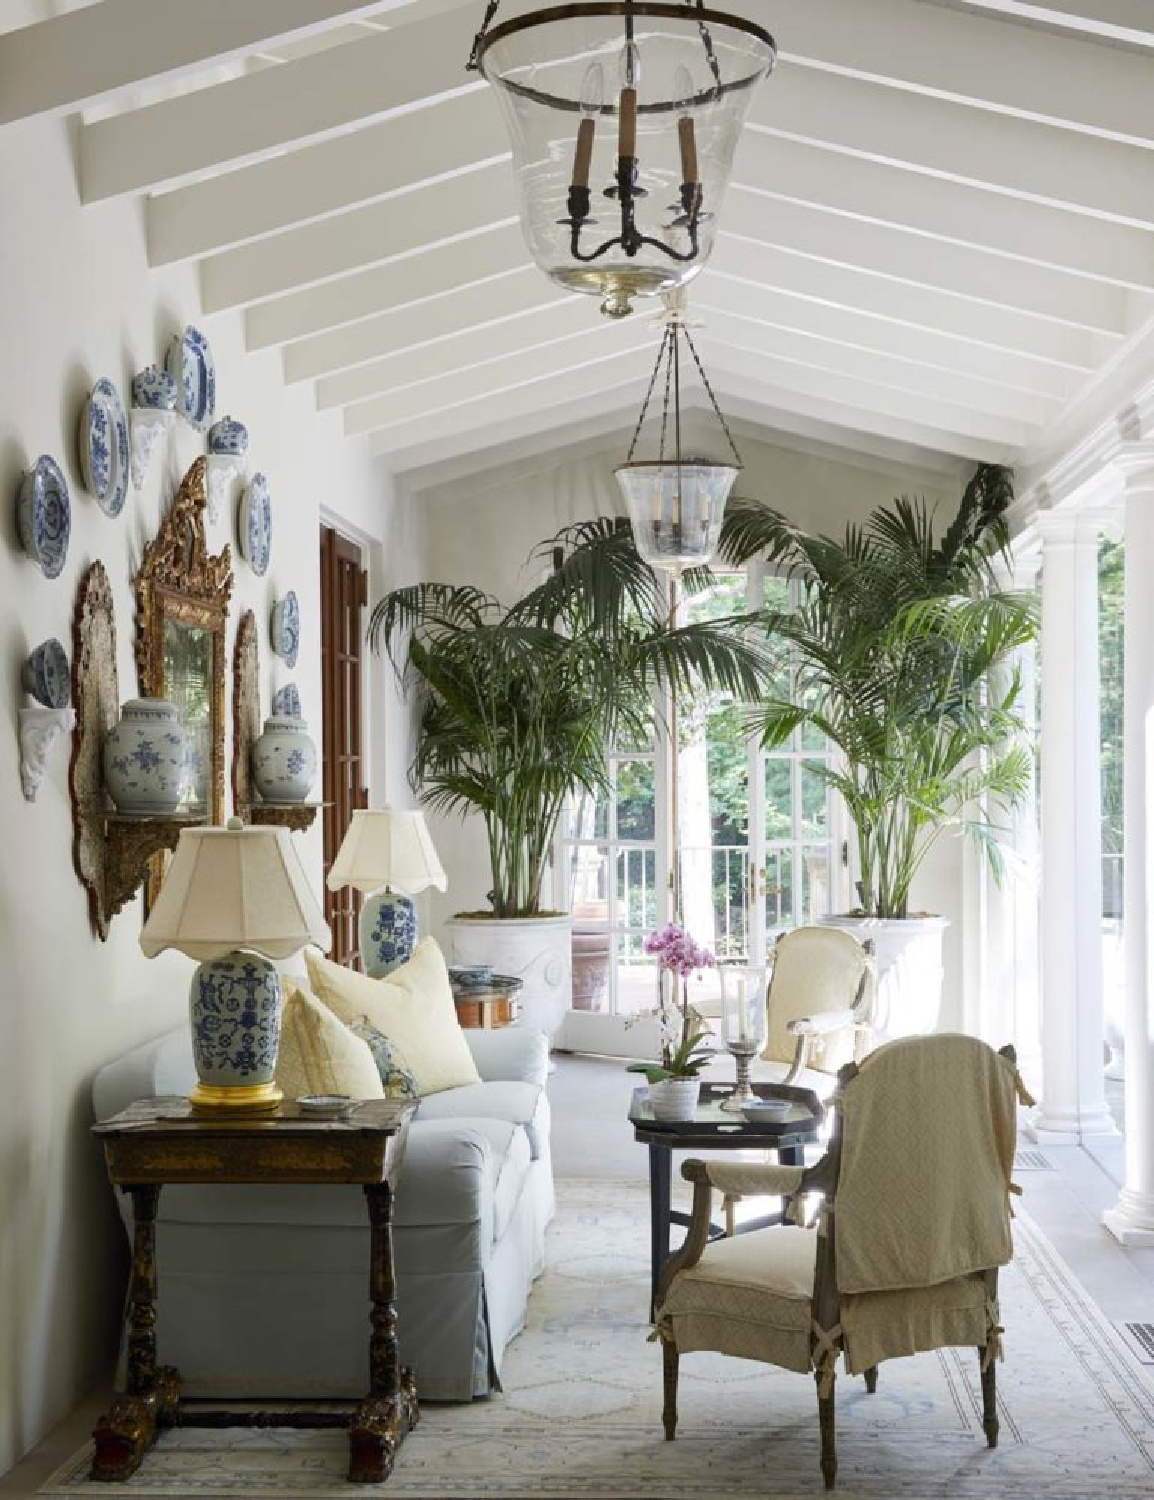 Elegant traditional interior design by Cathy Kincaid. #traditionalstyle #elegantdecor #timelessdesign